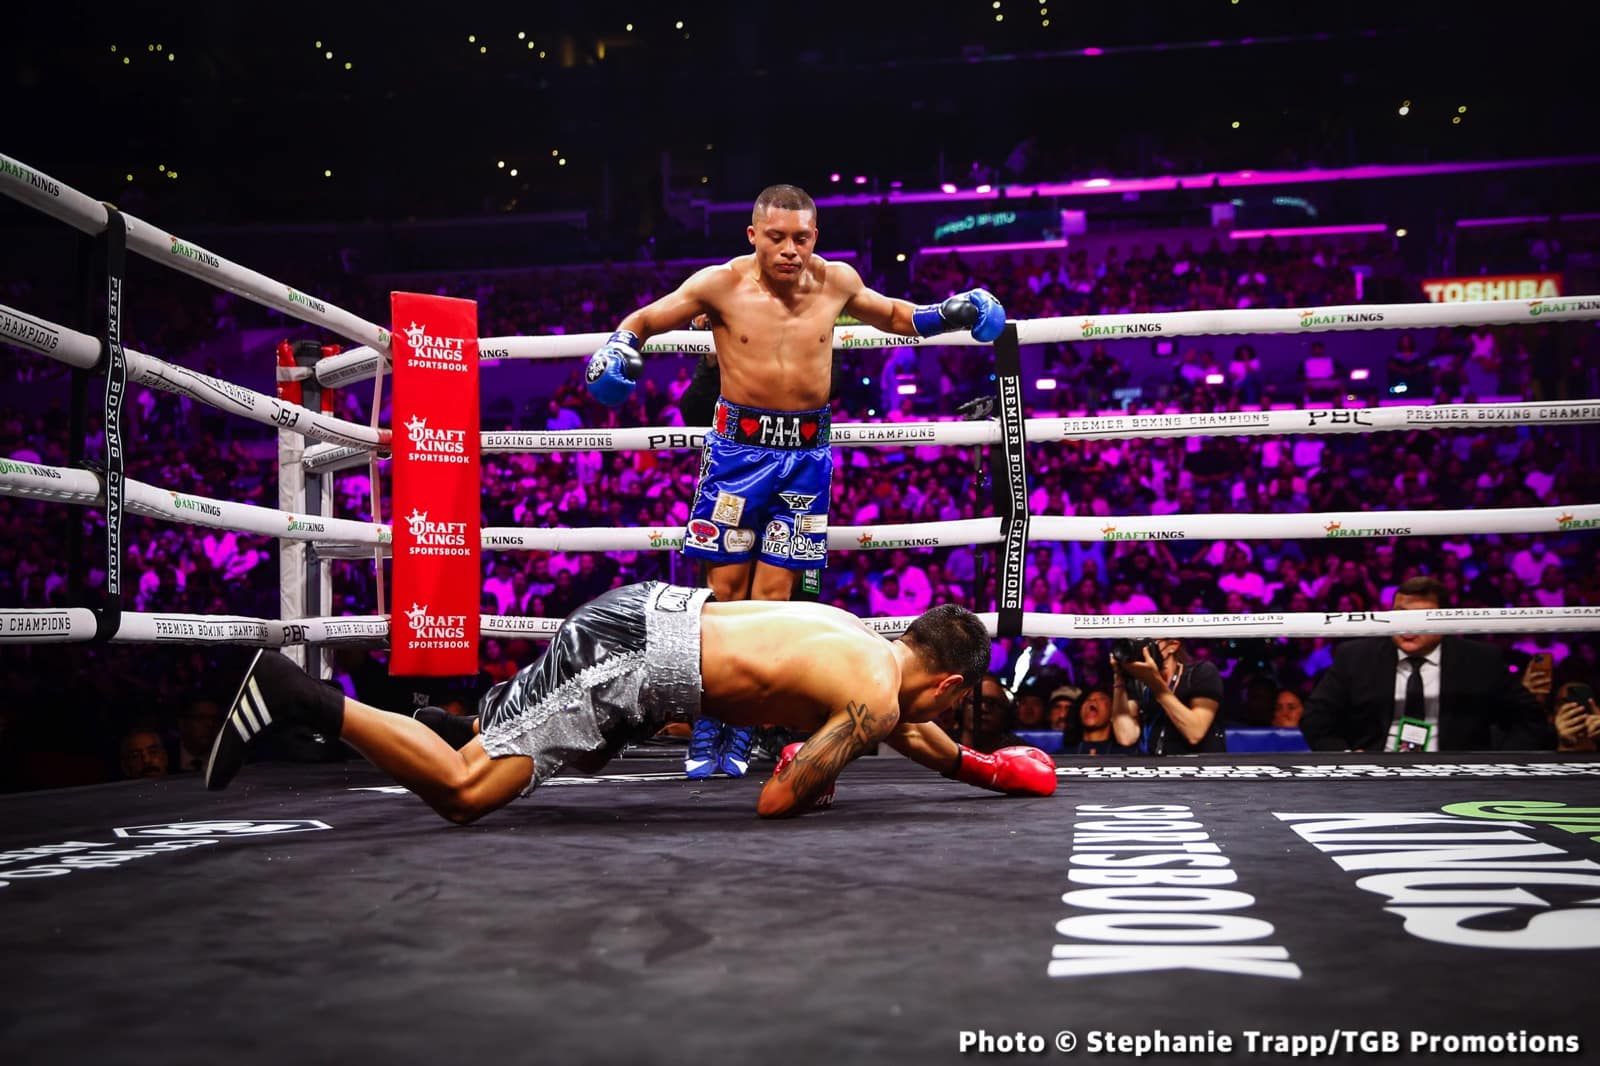 Isaac Cruz boxing image / photo